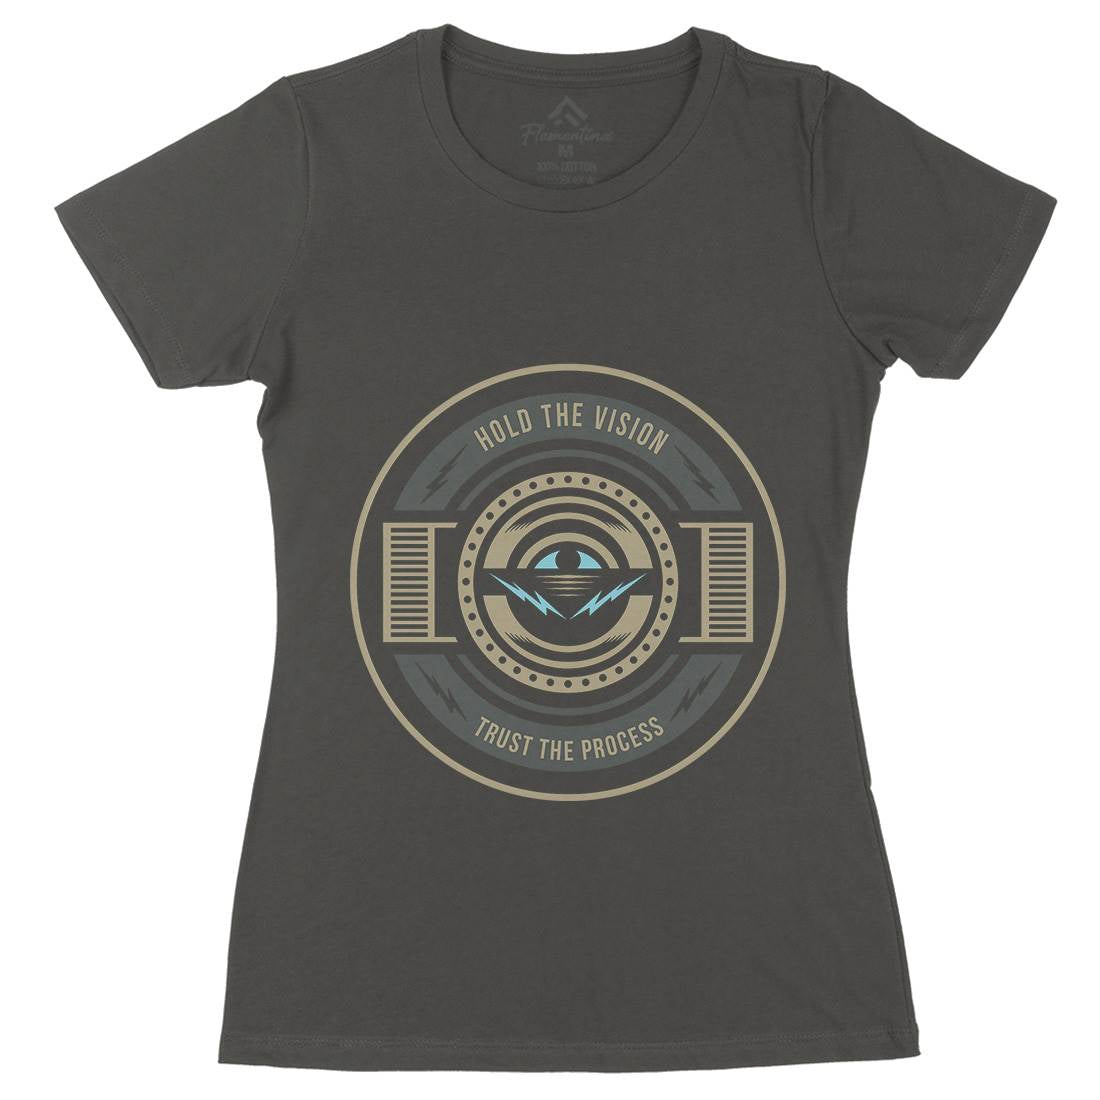 Hold The Vision Womens Organic Crew Neck T-Shirt Illuminati A331